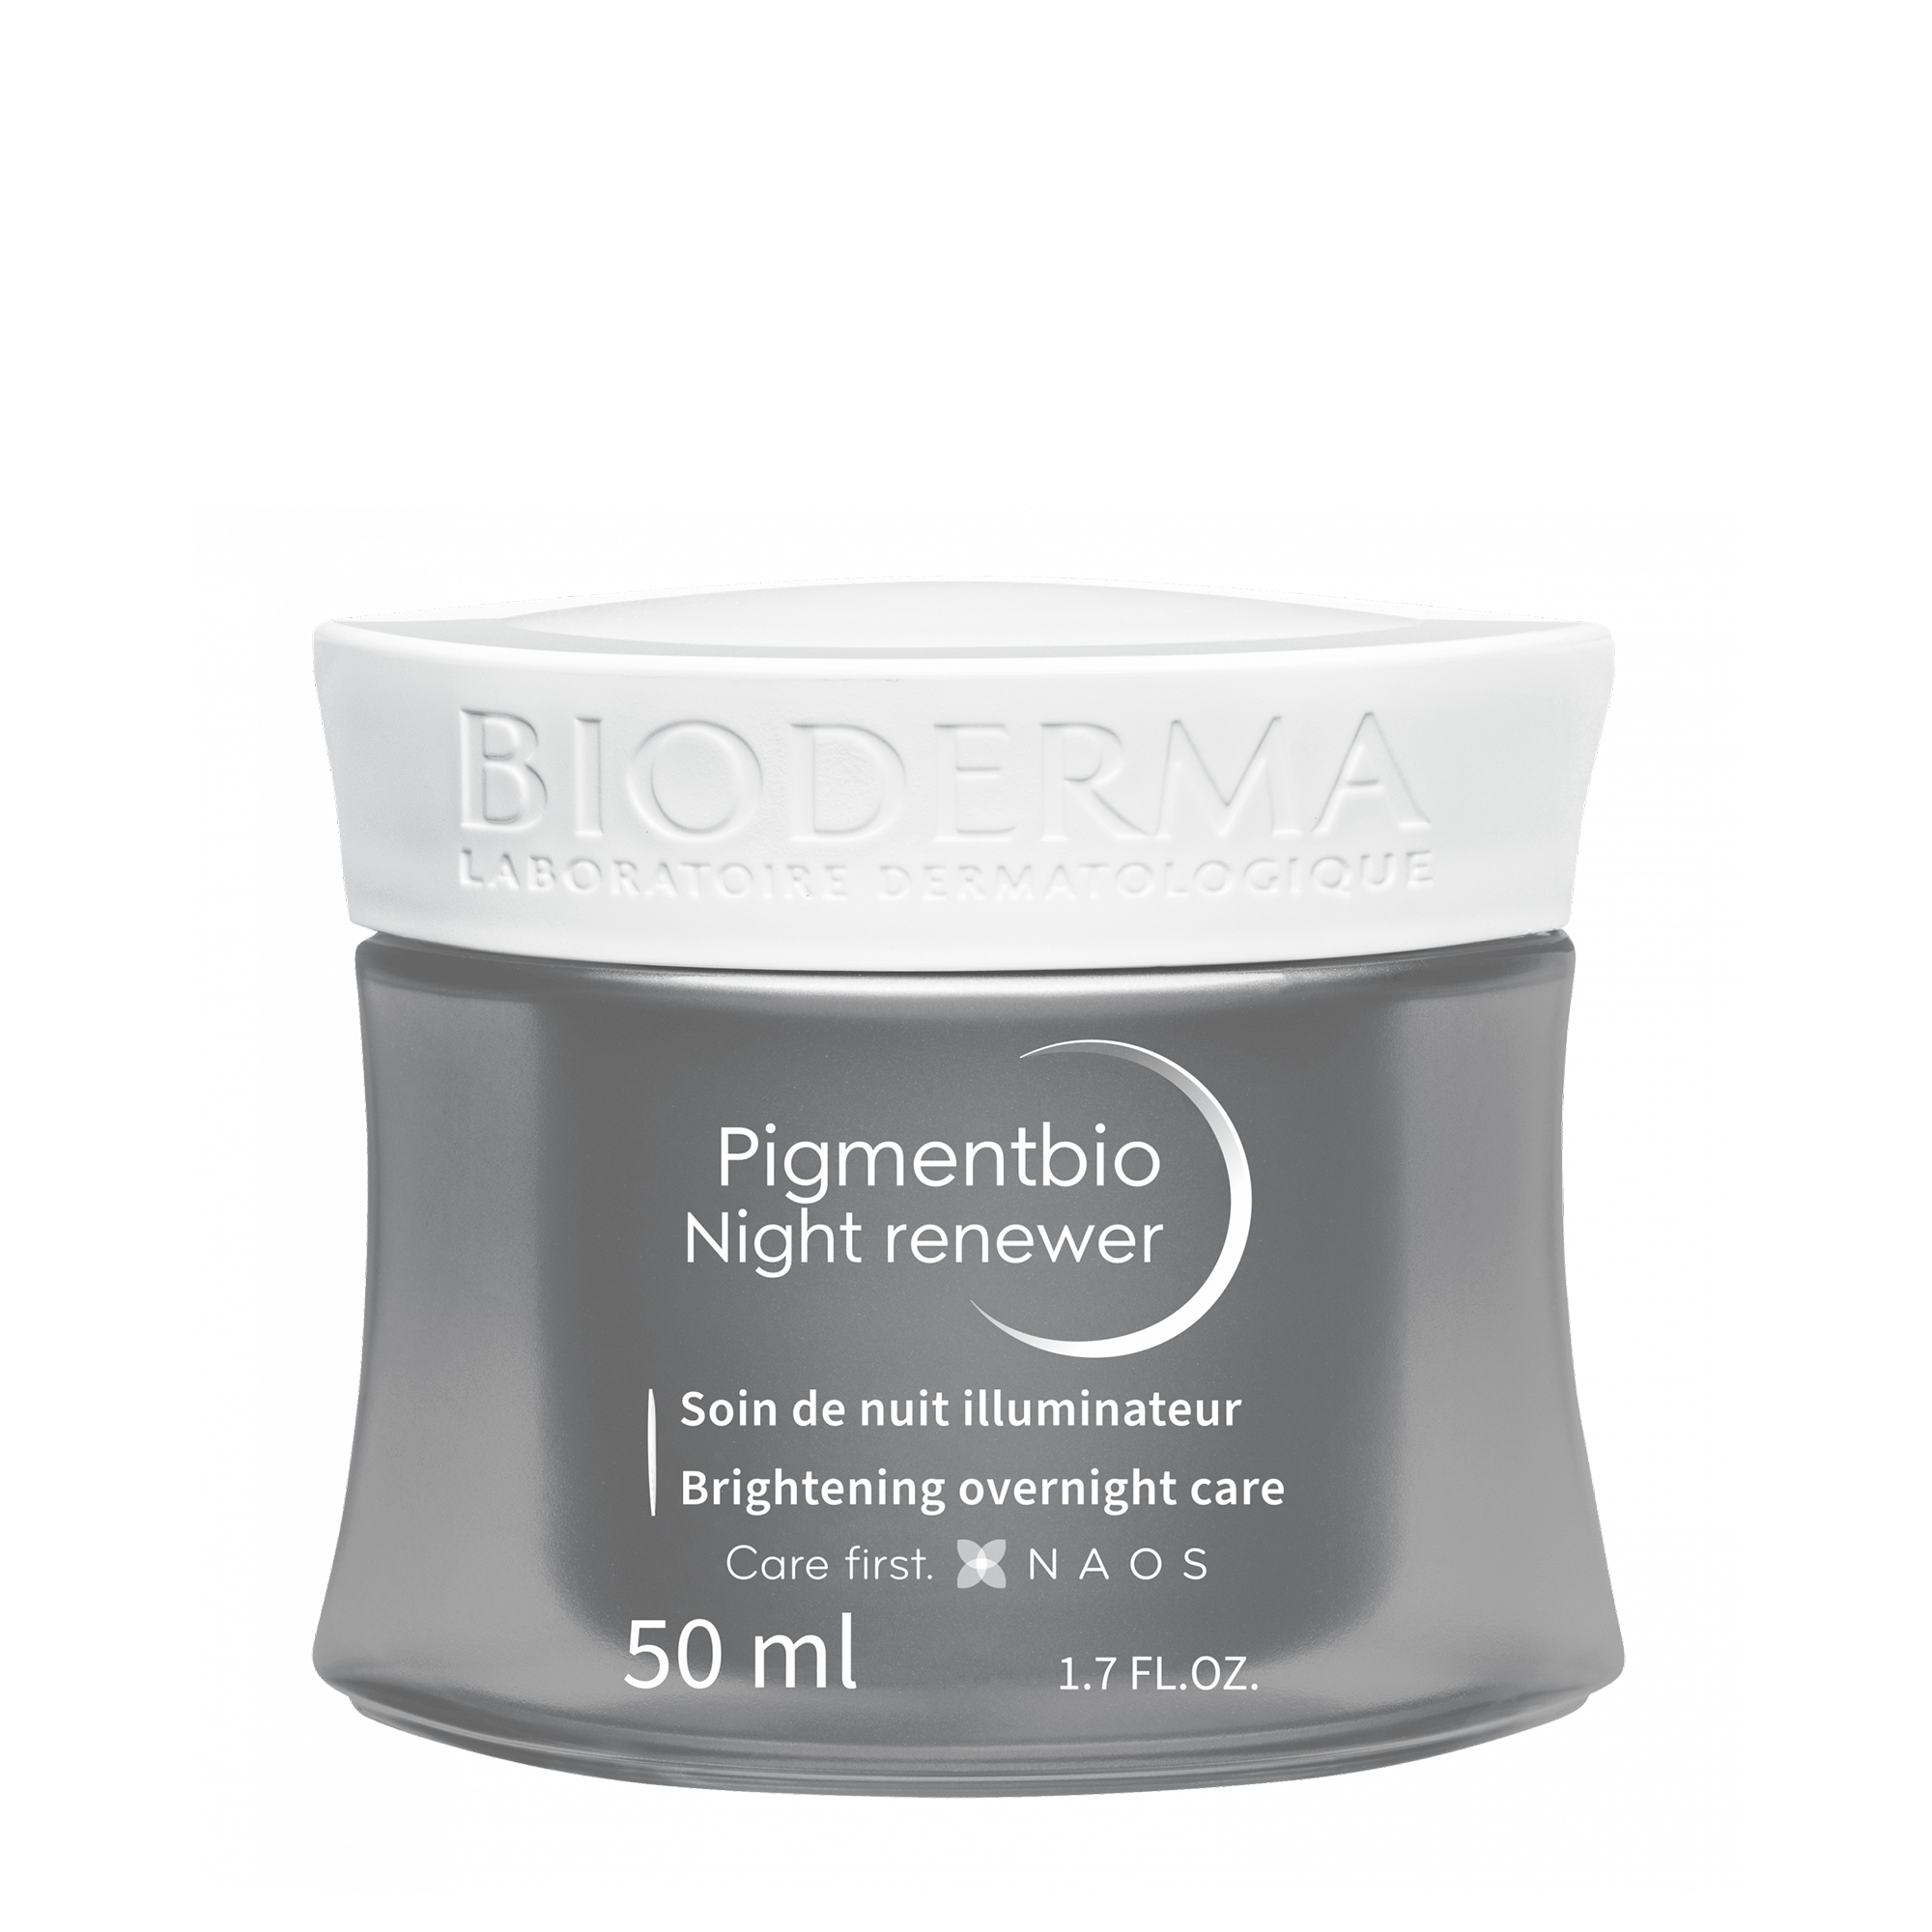 Bioderma Pigmentbio Night Renewer - 1.7oz